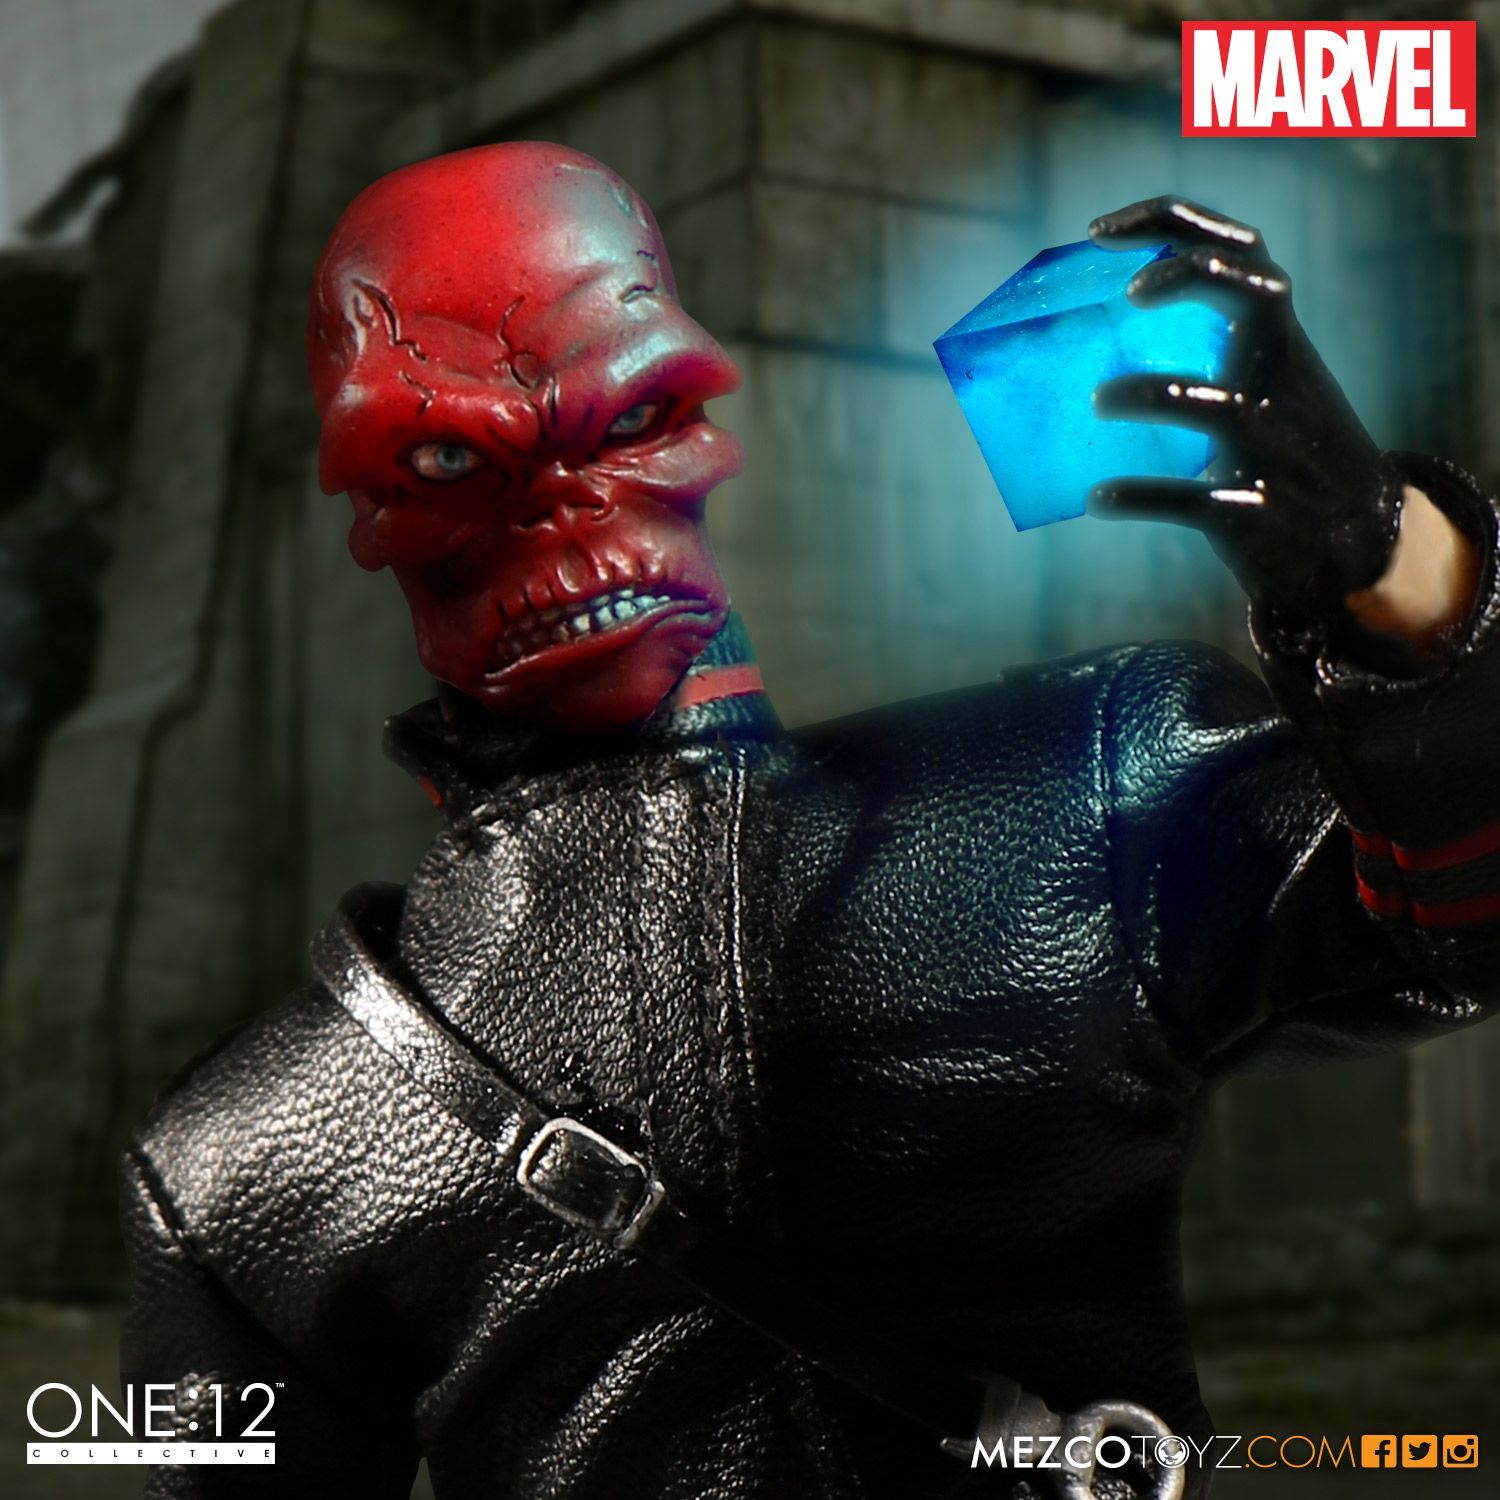 Mezco Marvel One:12 Collective Red Skull Action Figure - Nerd Arena